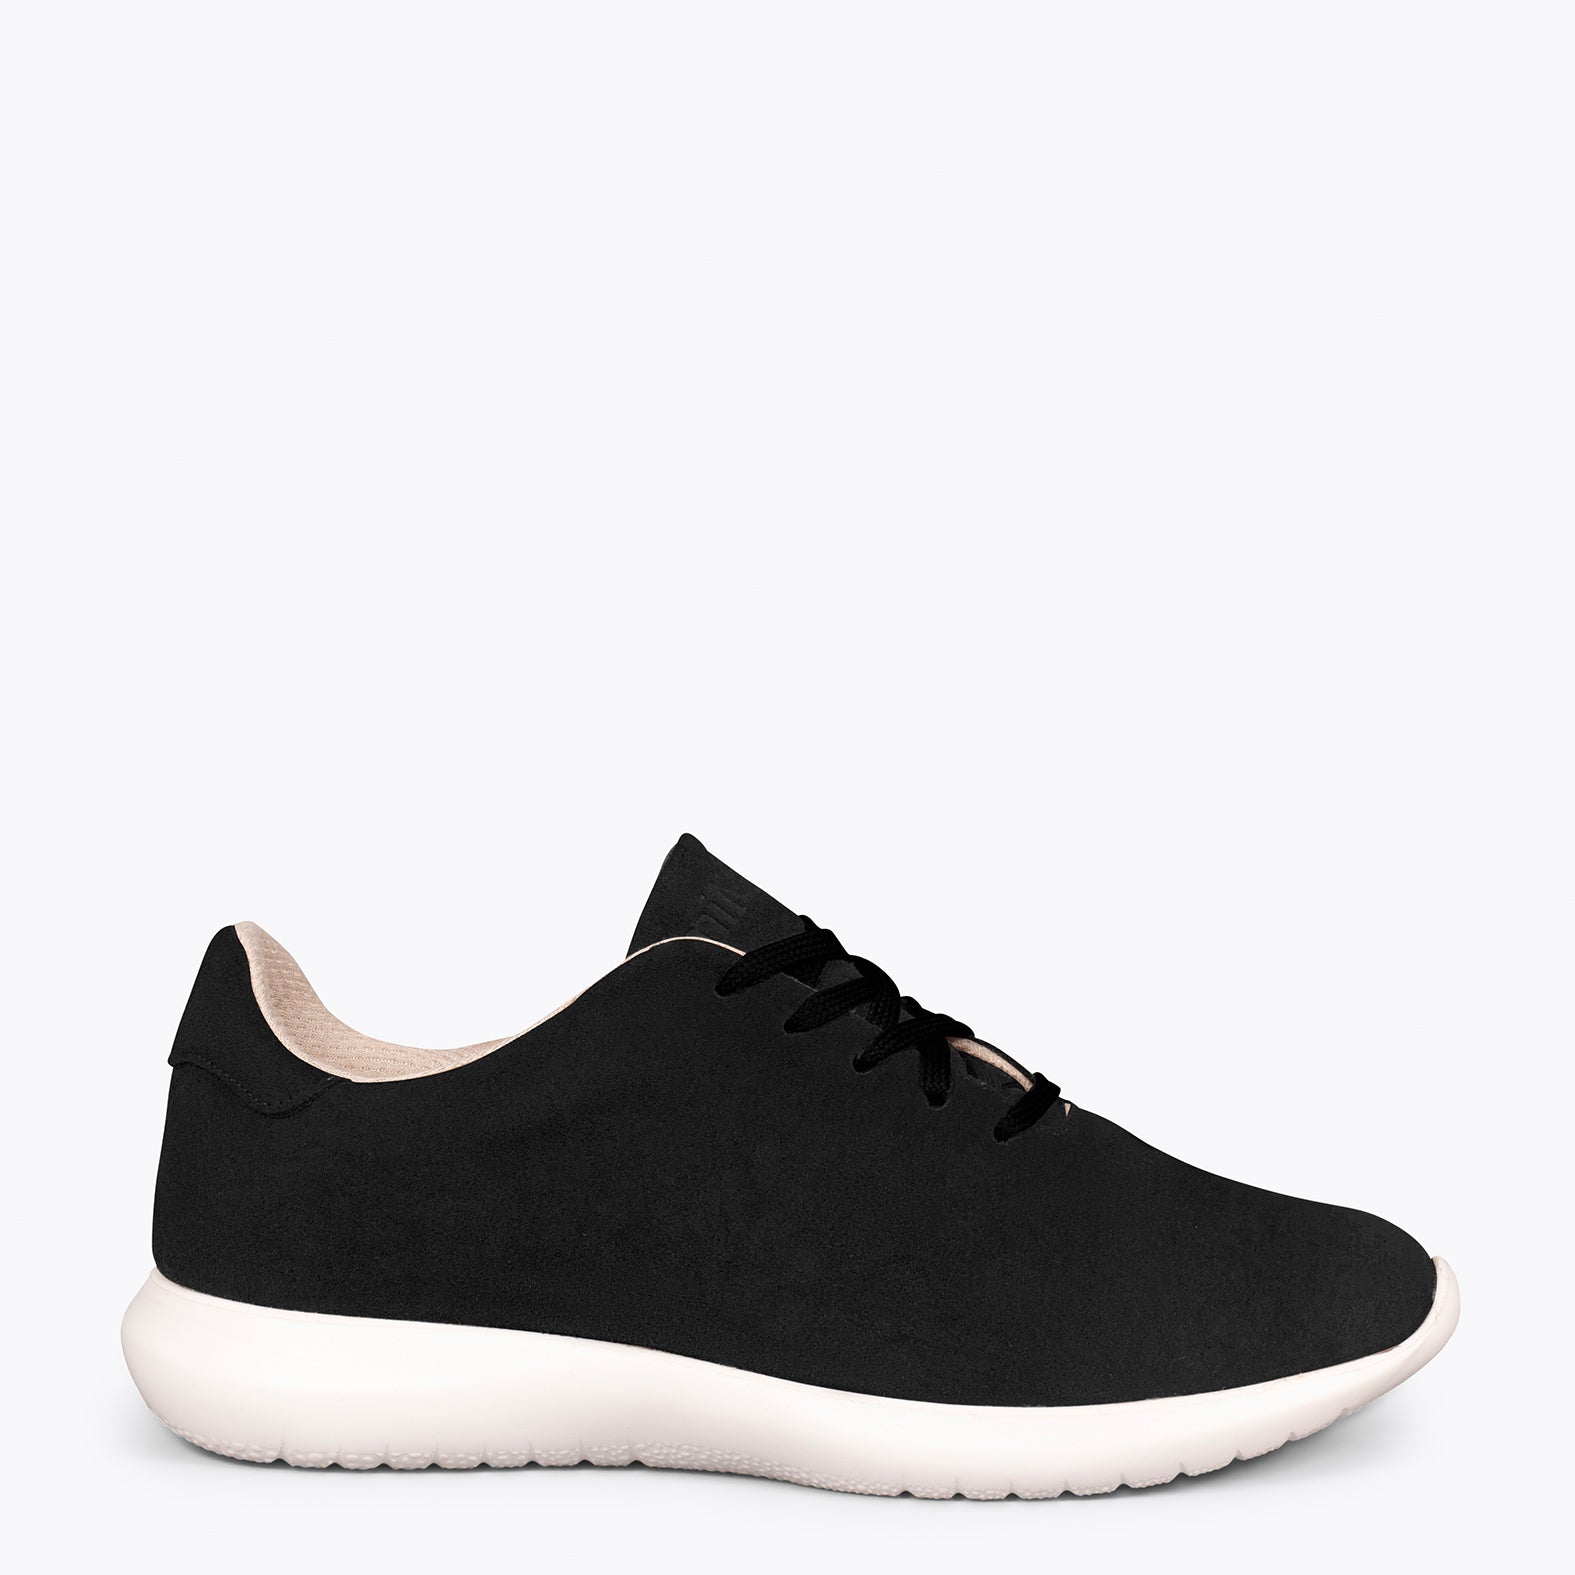 WALK – BLACK comfortable women’s sneakers